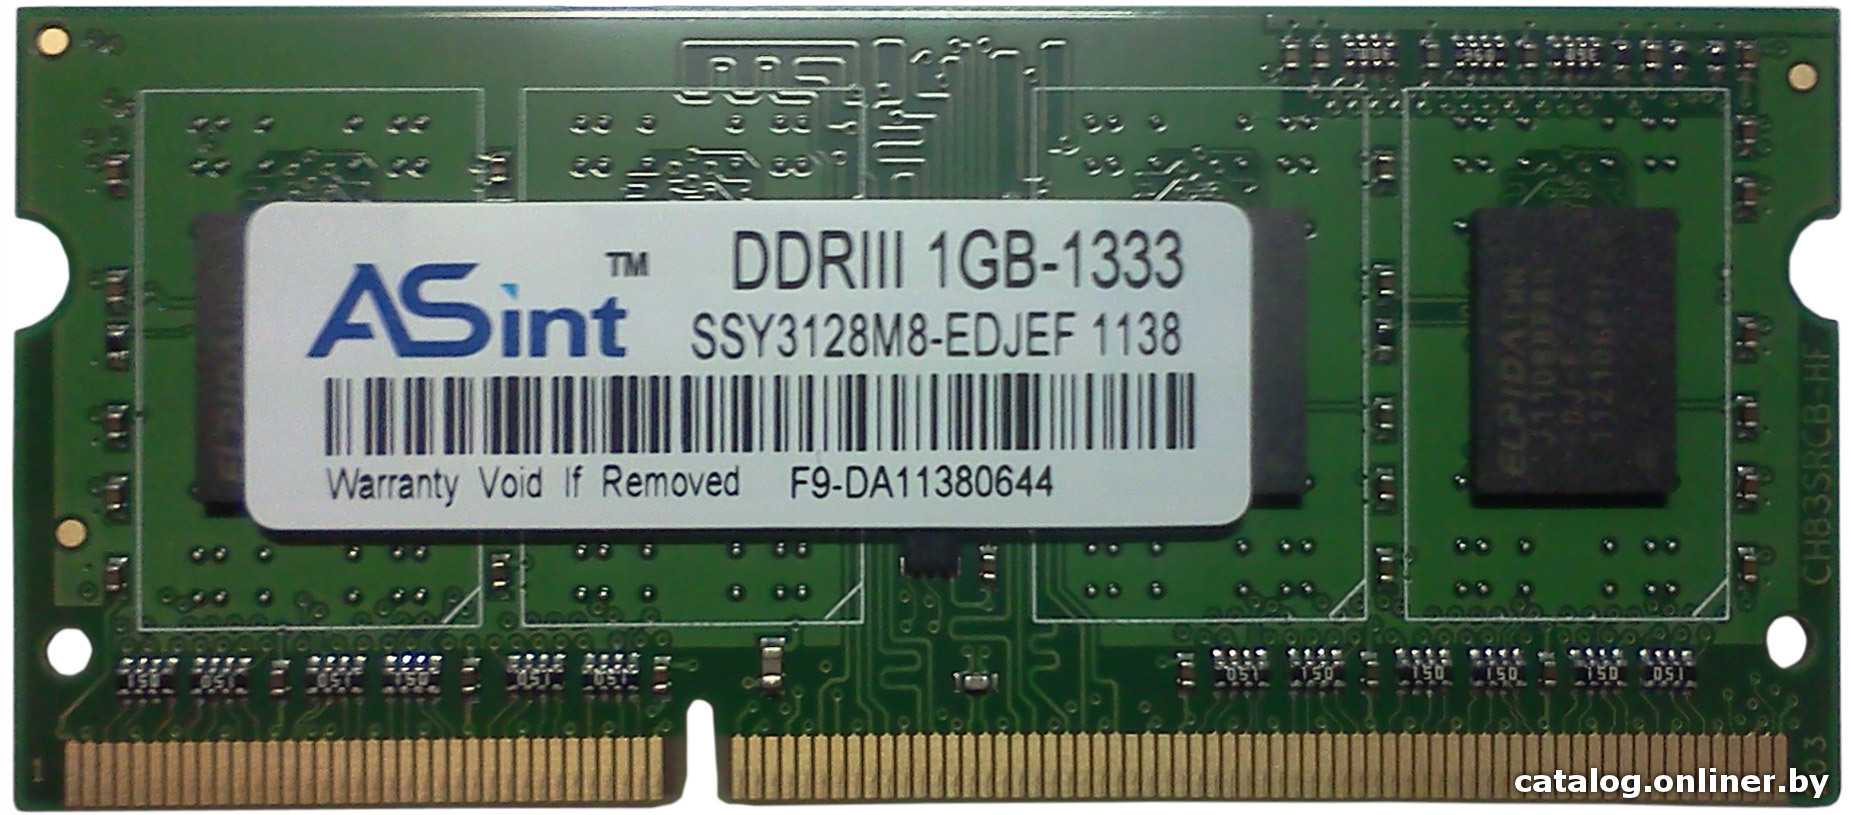 Оперативная память SO-DIMM DDR III, 1Gb, ASint 1333 Mhz <SSY3128M8-edjef>